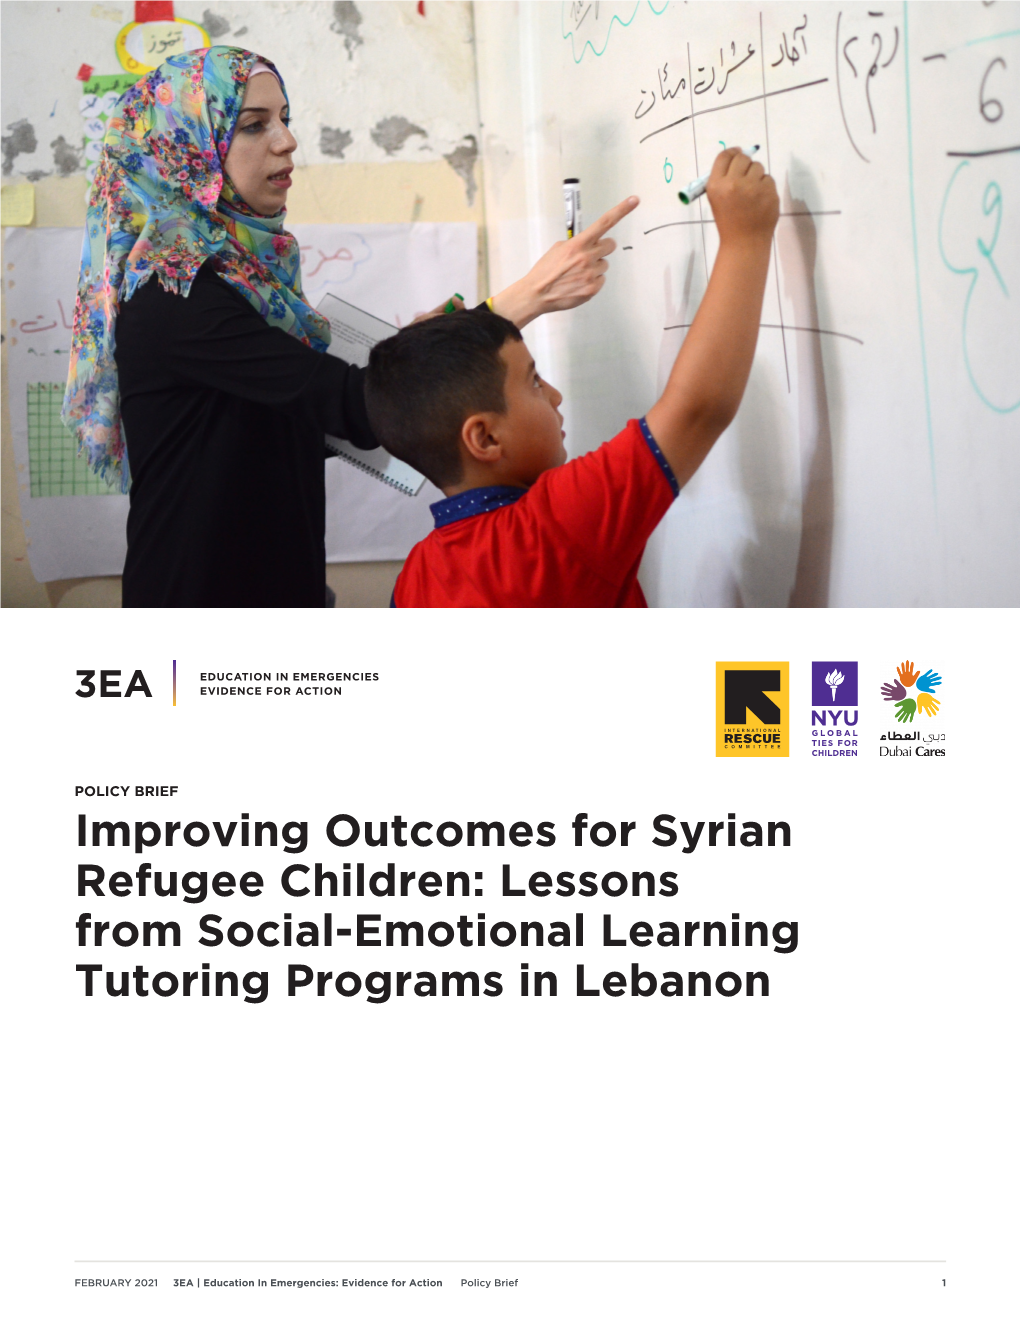 Improving Outcomes for Syrian Refugee Children: Lessons from Social-Emotional Learning Tutoring Programs in Lebanon